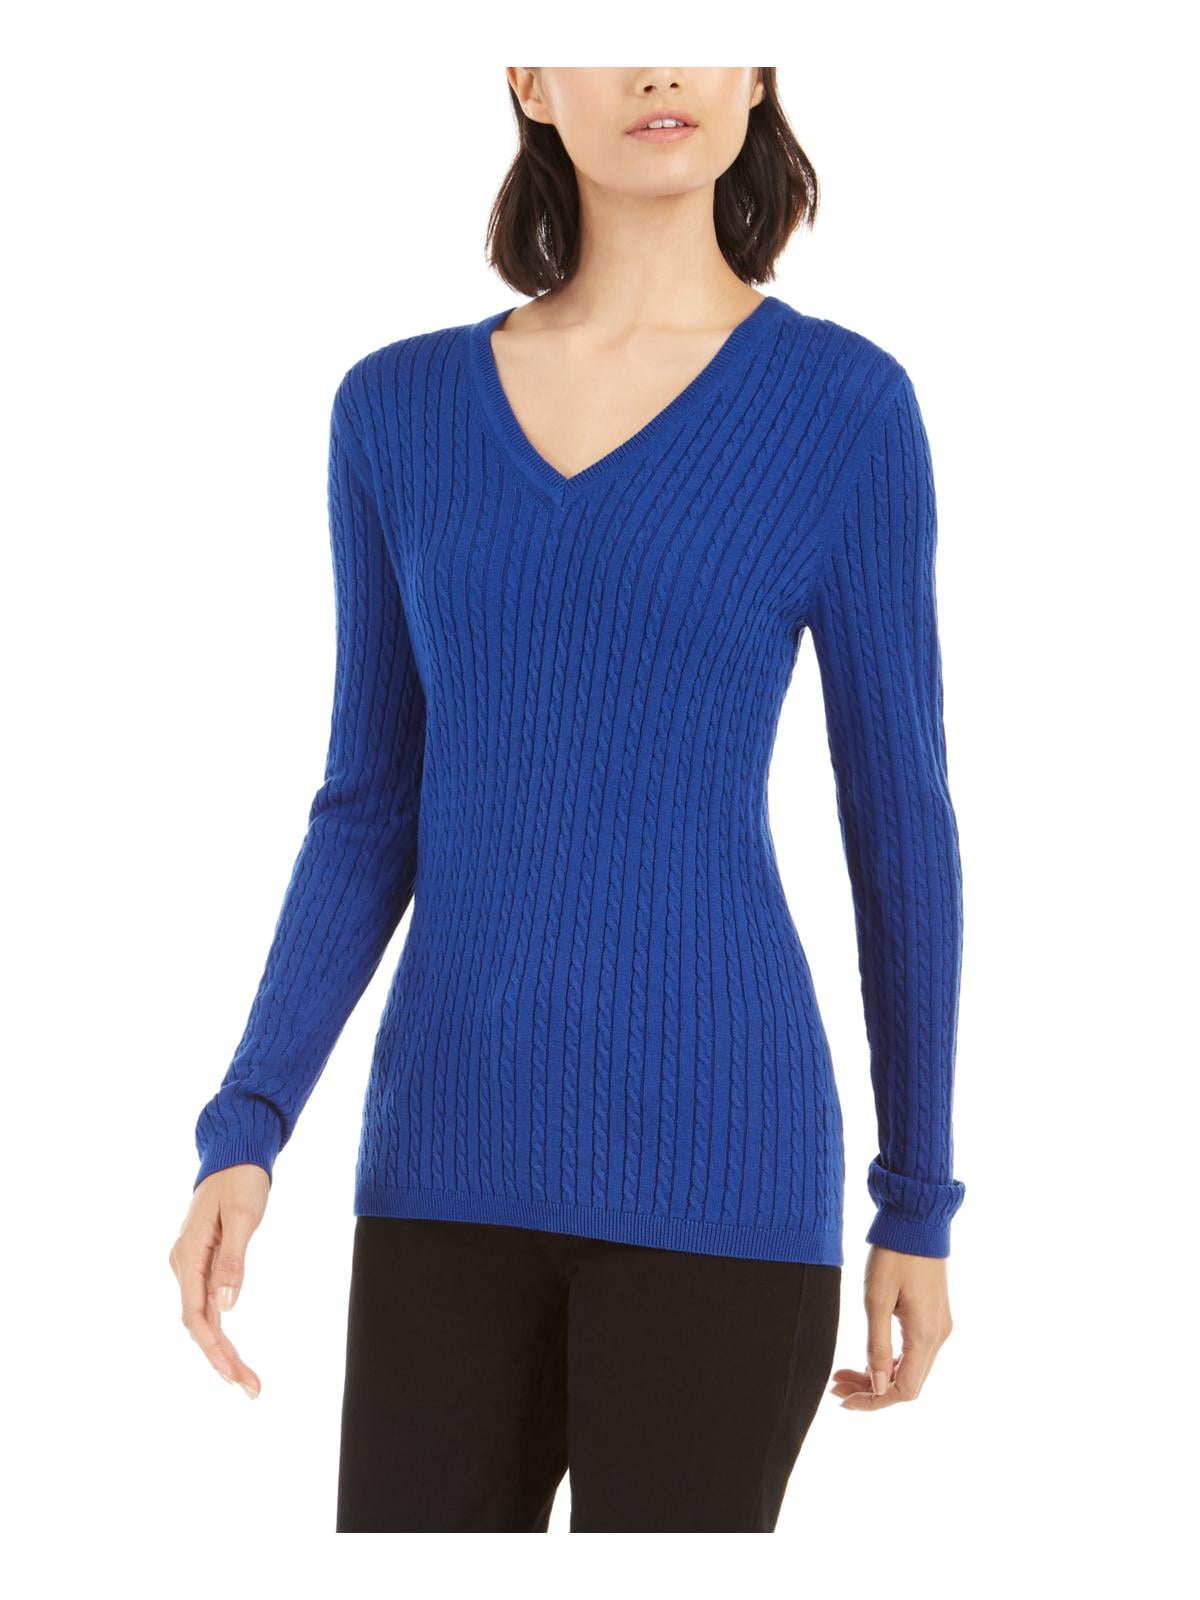 Hilfiger Womens Ivy Cotton Cable Knit Sweater Blue XL - Walmart.com